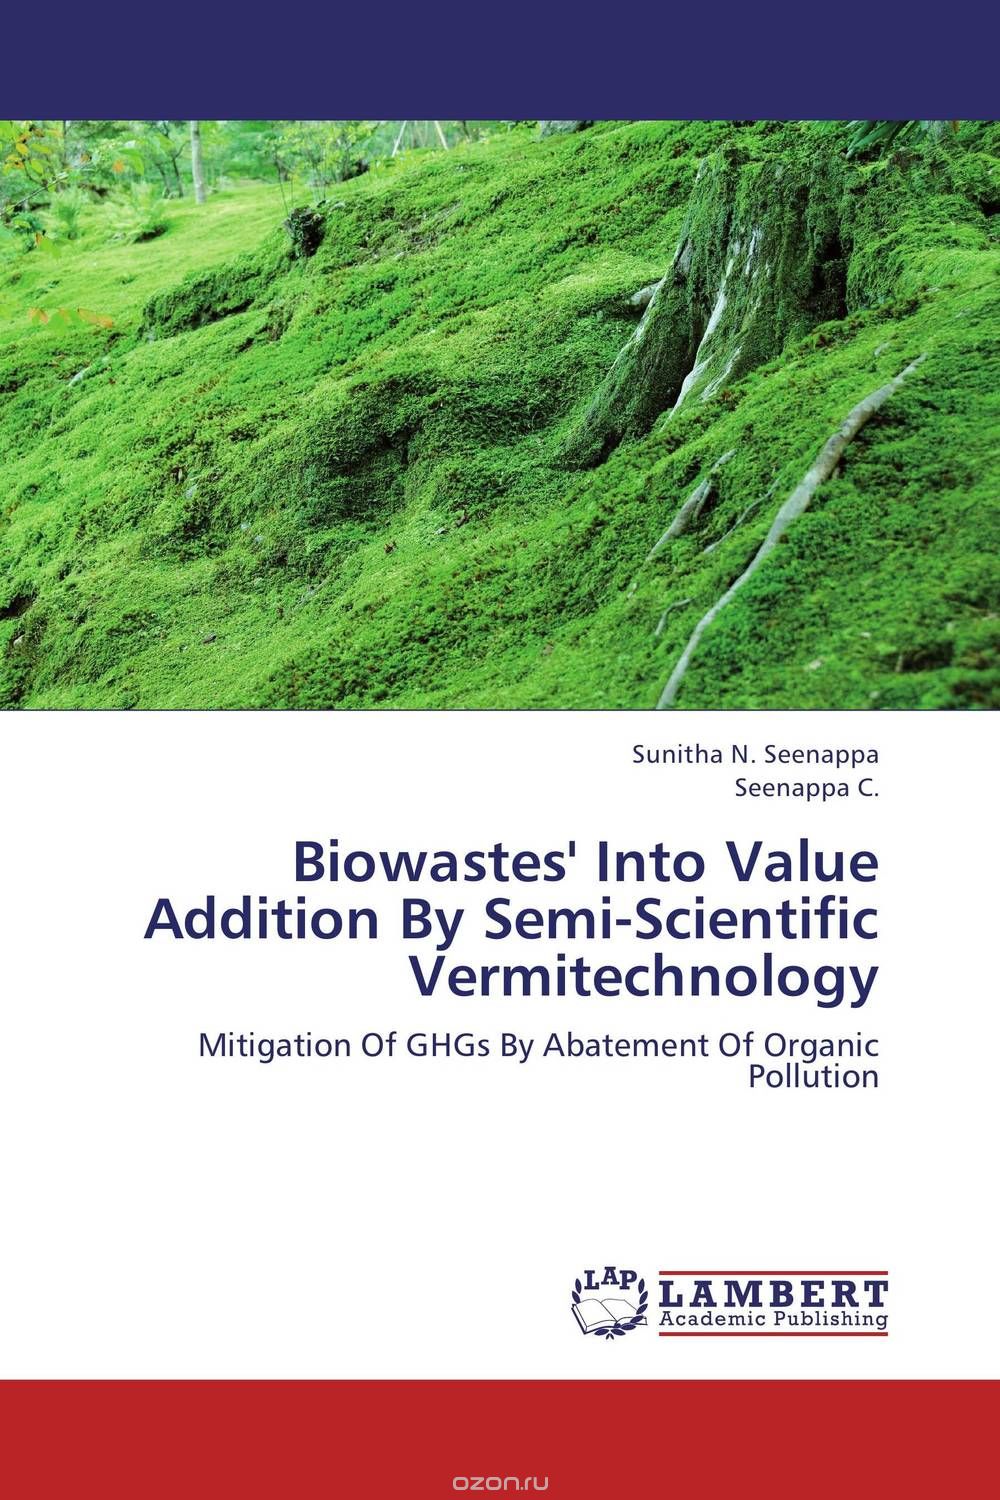 Скачать книгу "Biowastes' Into Value Addition By Semi-Scientific Vermitechnology"